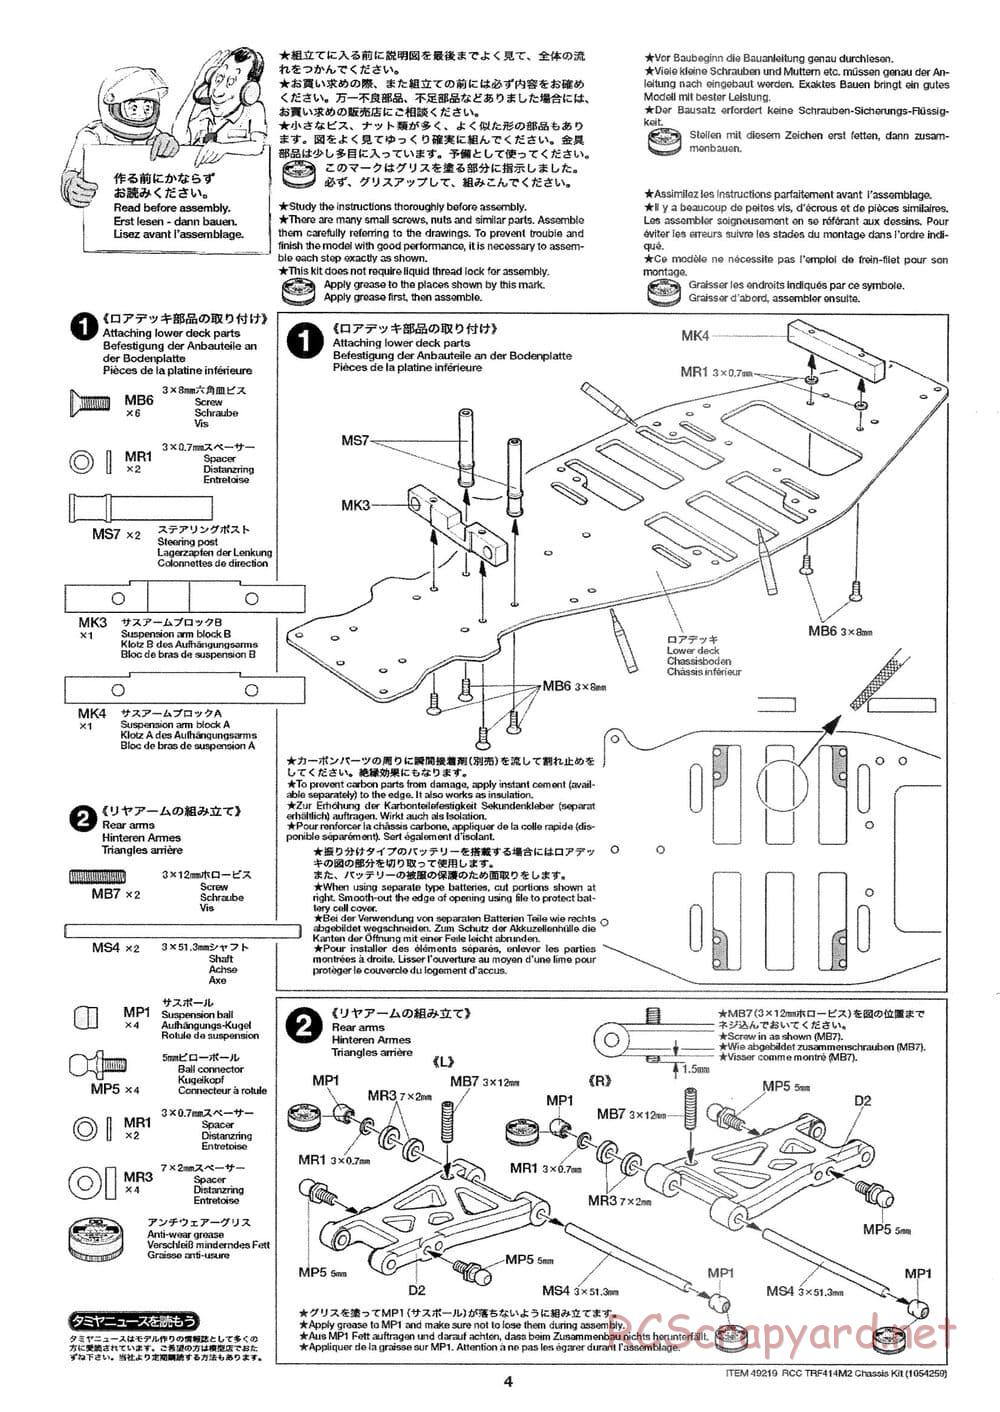 Tamiya - TRF414M II Chassis - Manual - Page 4